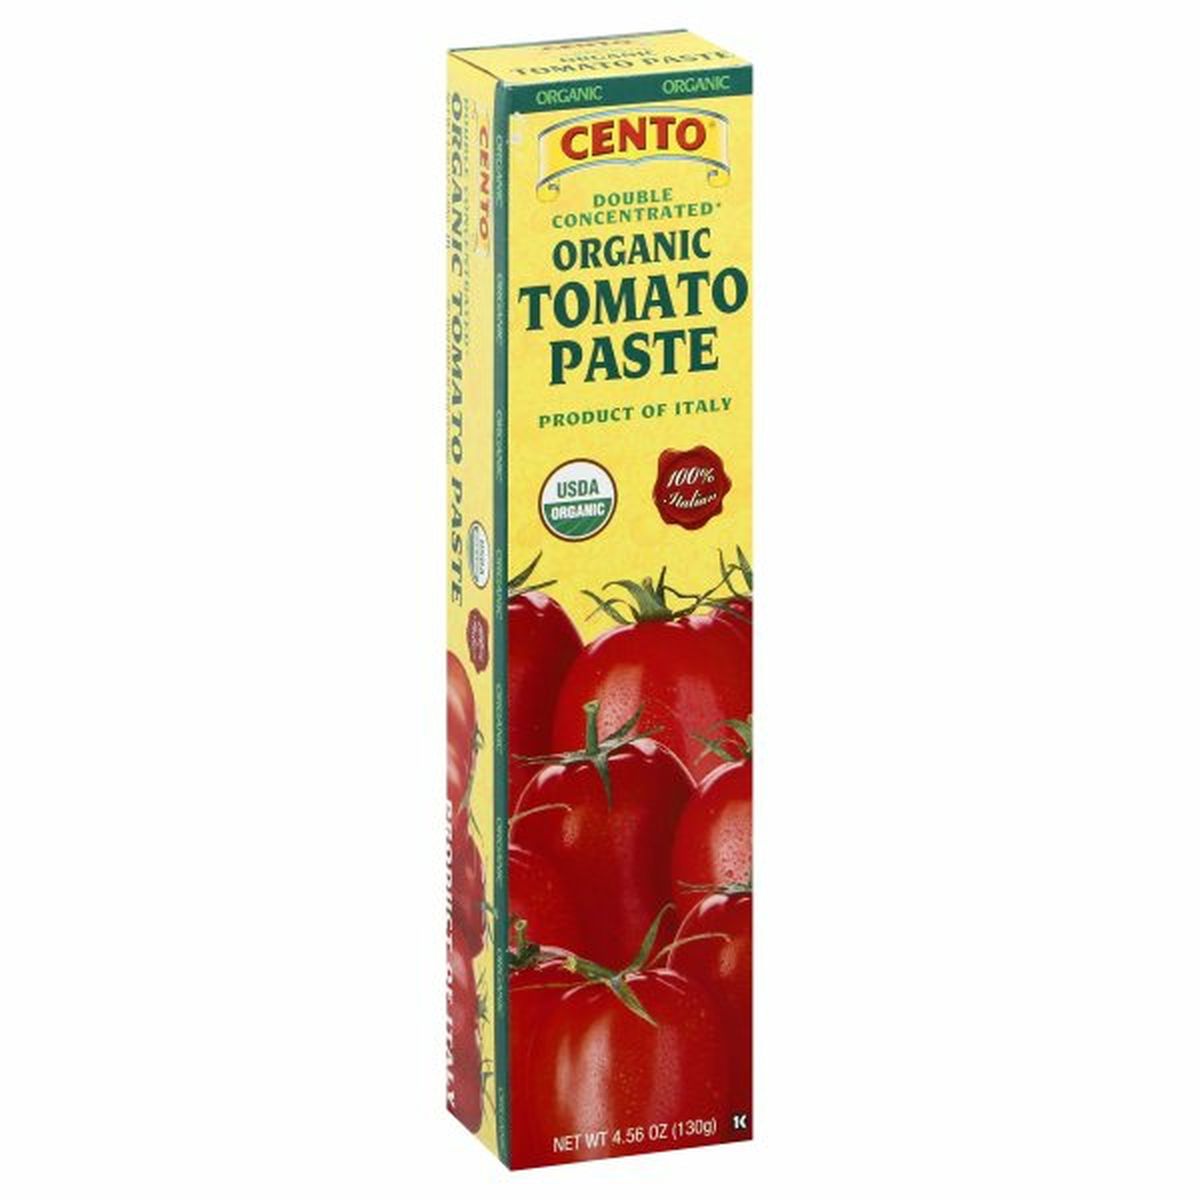 Calories in Cento Tomato Paste, Organic